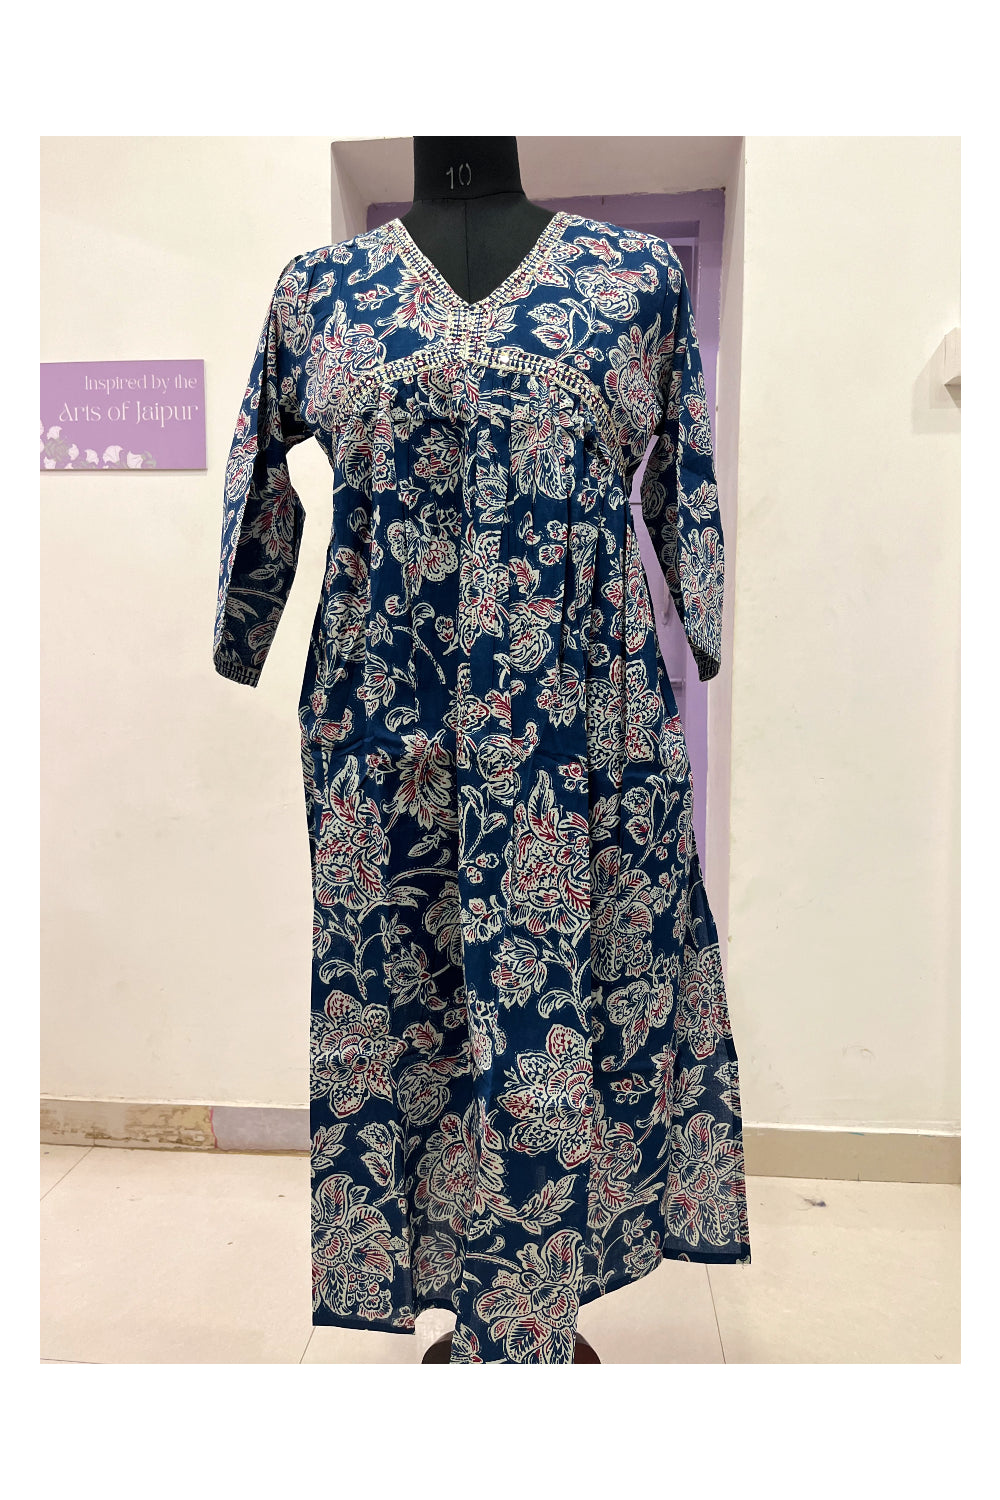 Southloom Stitched Salwar Set with Floral Prints in Blue